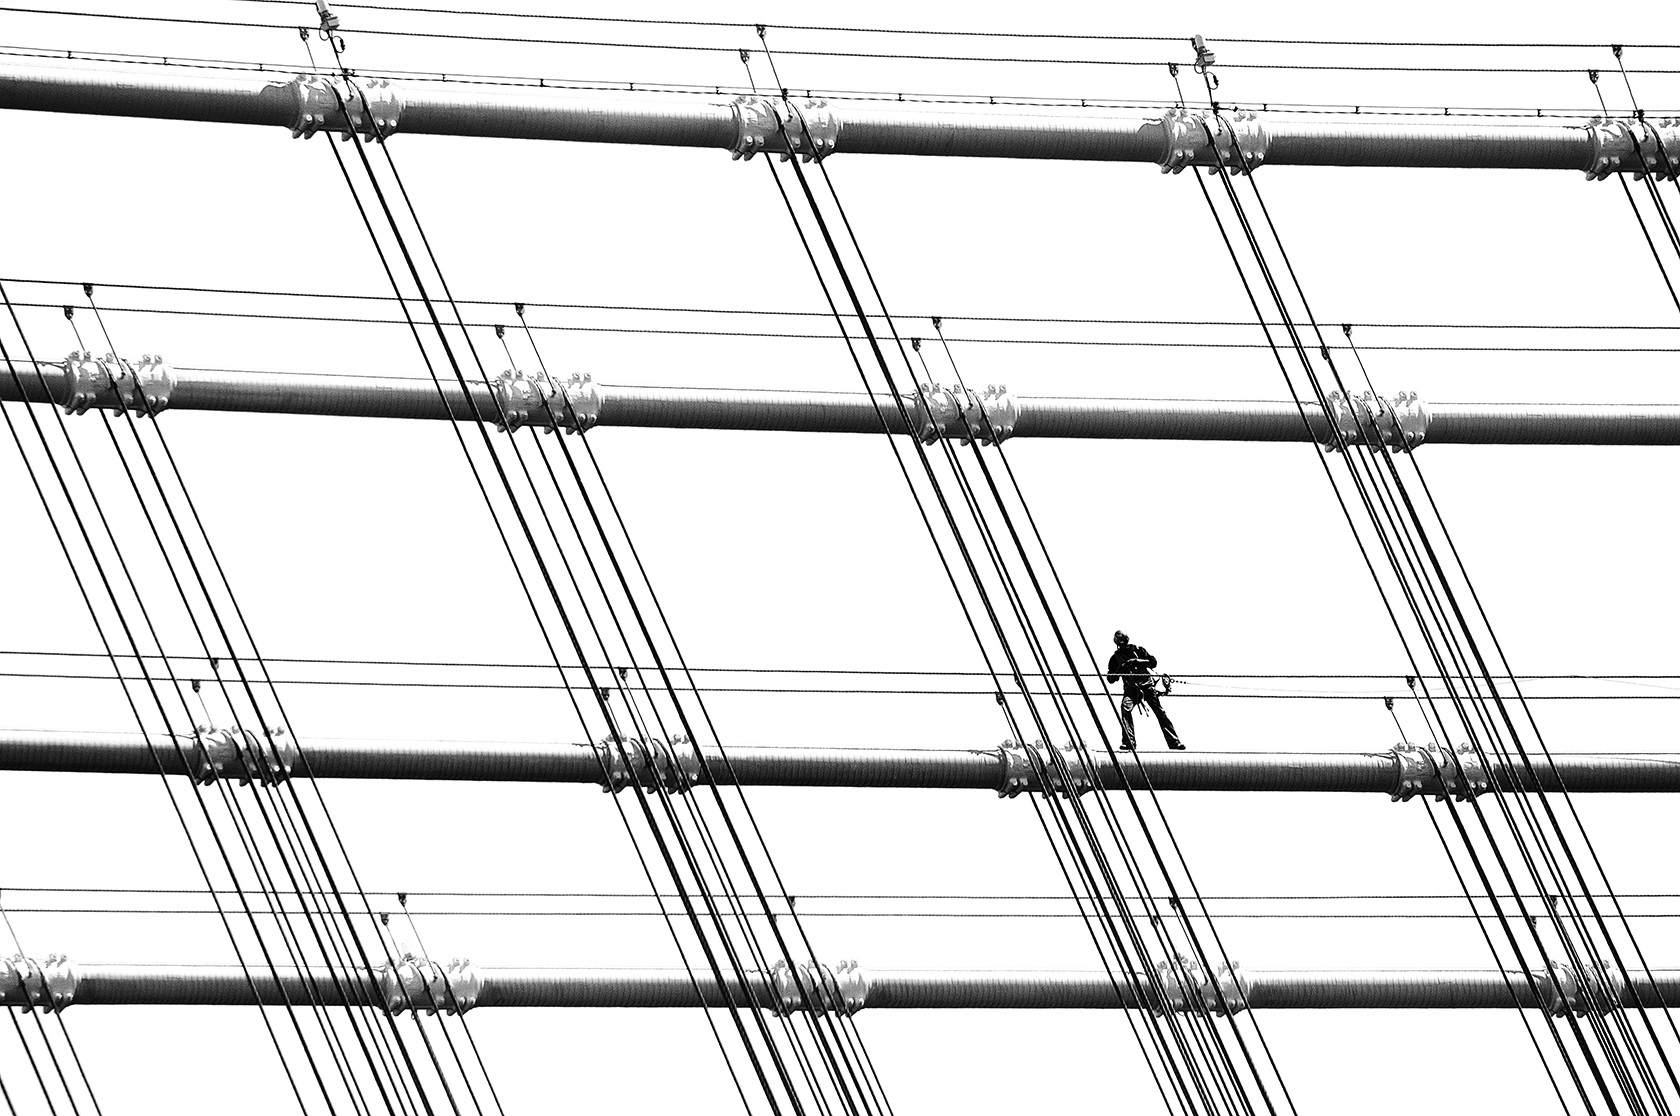 A man working on the Manhattan Bridge, New York City, NY, USA